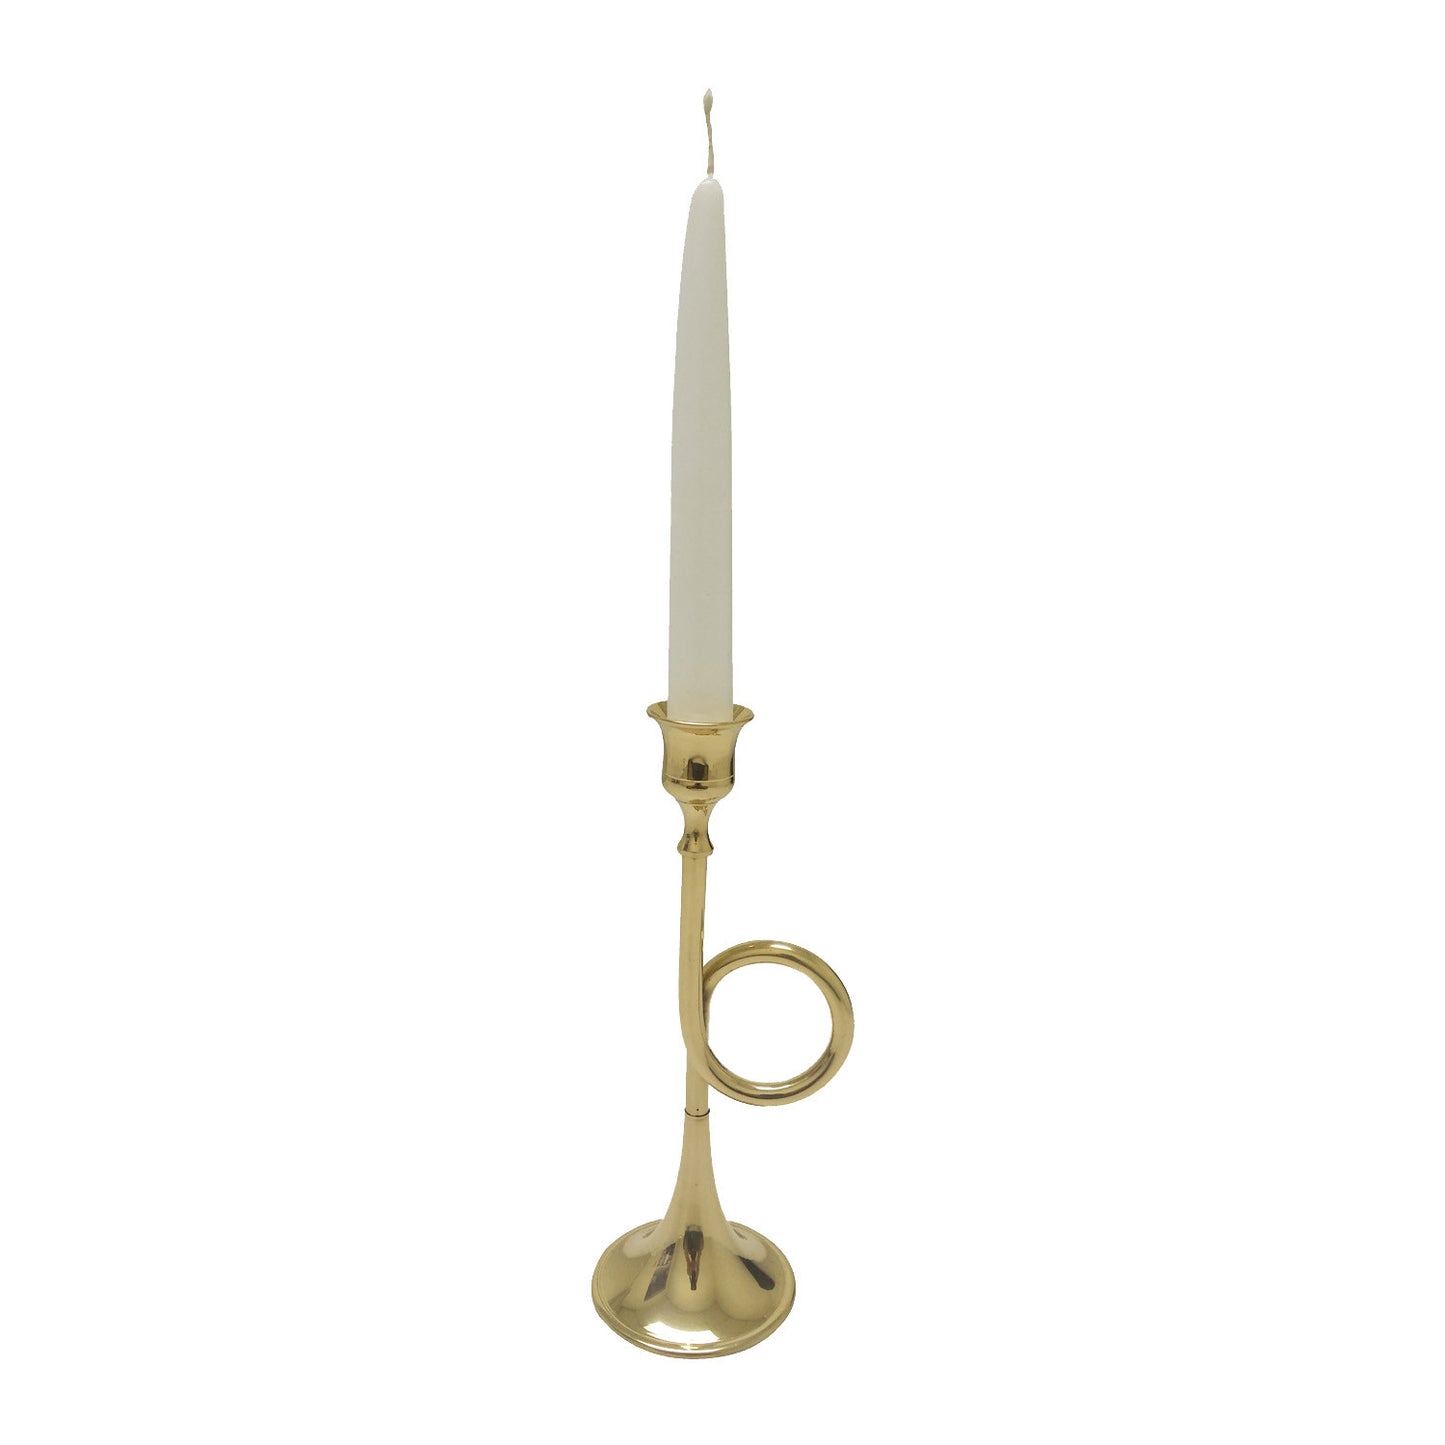 GiftBay 1009(S/2) Candlestick Holder, Brass Polished Finish, 8.5"h